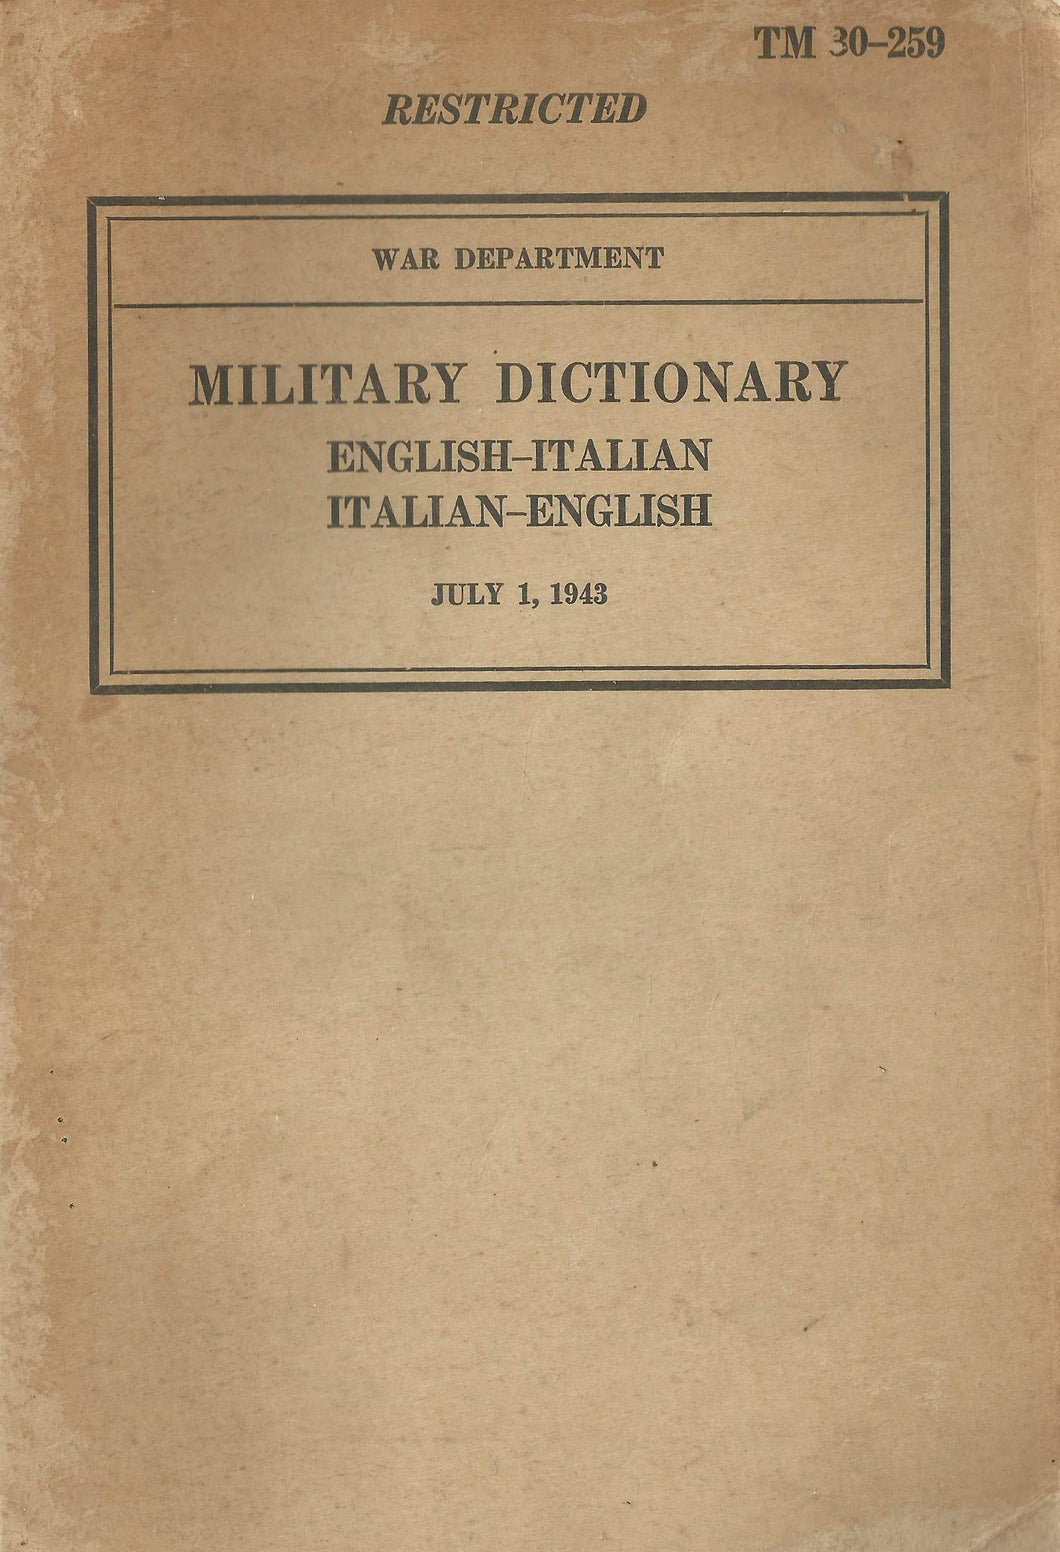 Military Dictionary TM 30-259 : English-Italian/Italian-English - War Department, July 1, 1943 (Restricted)